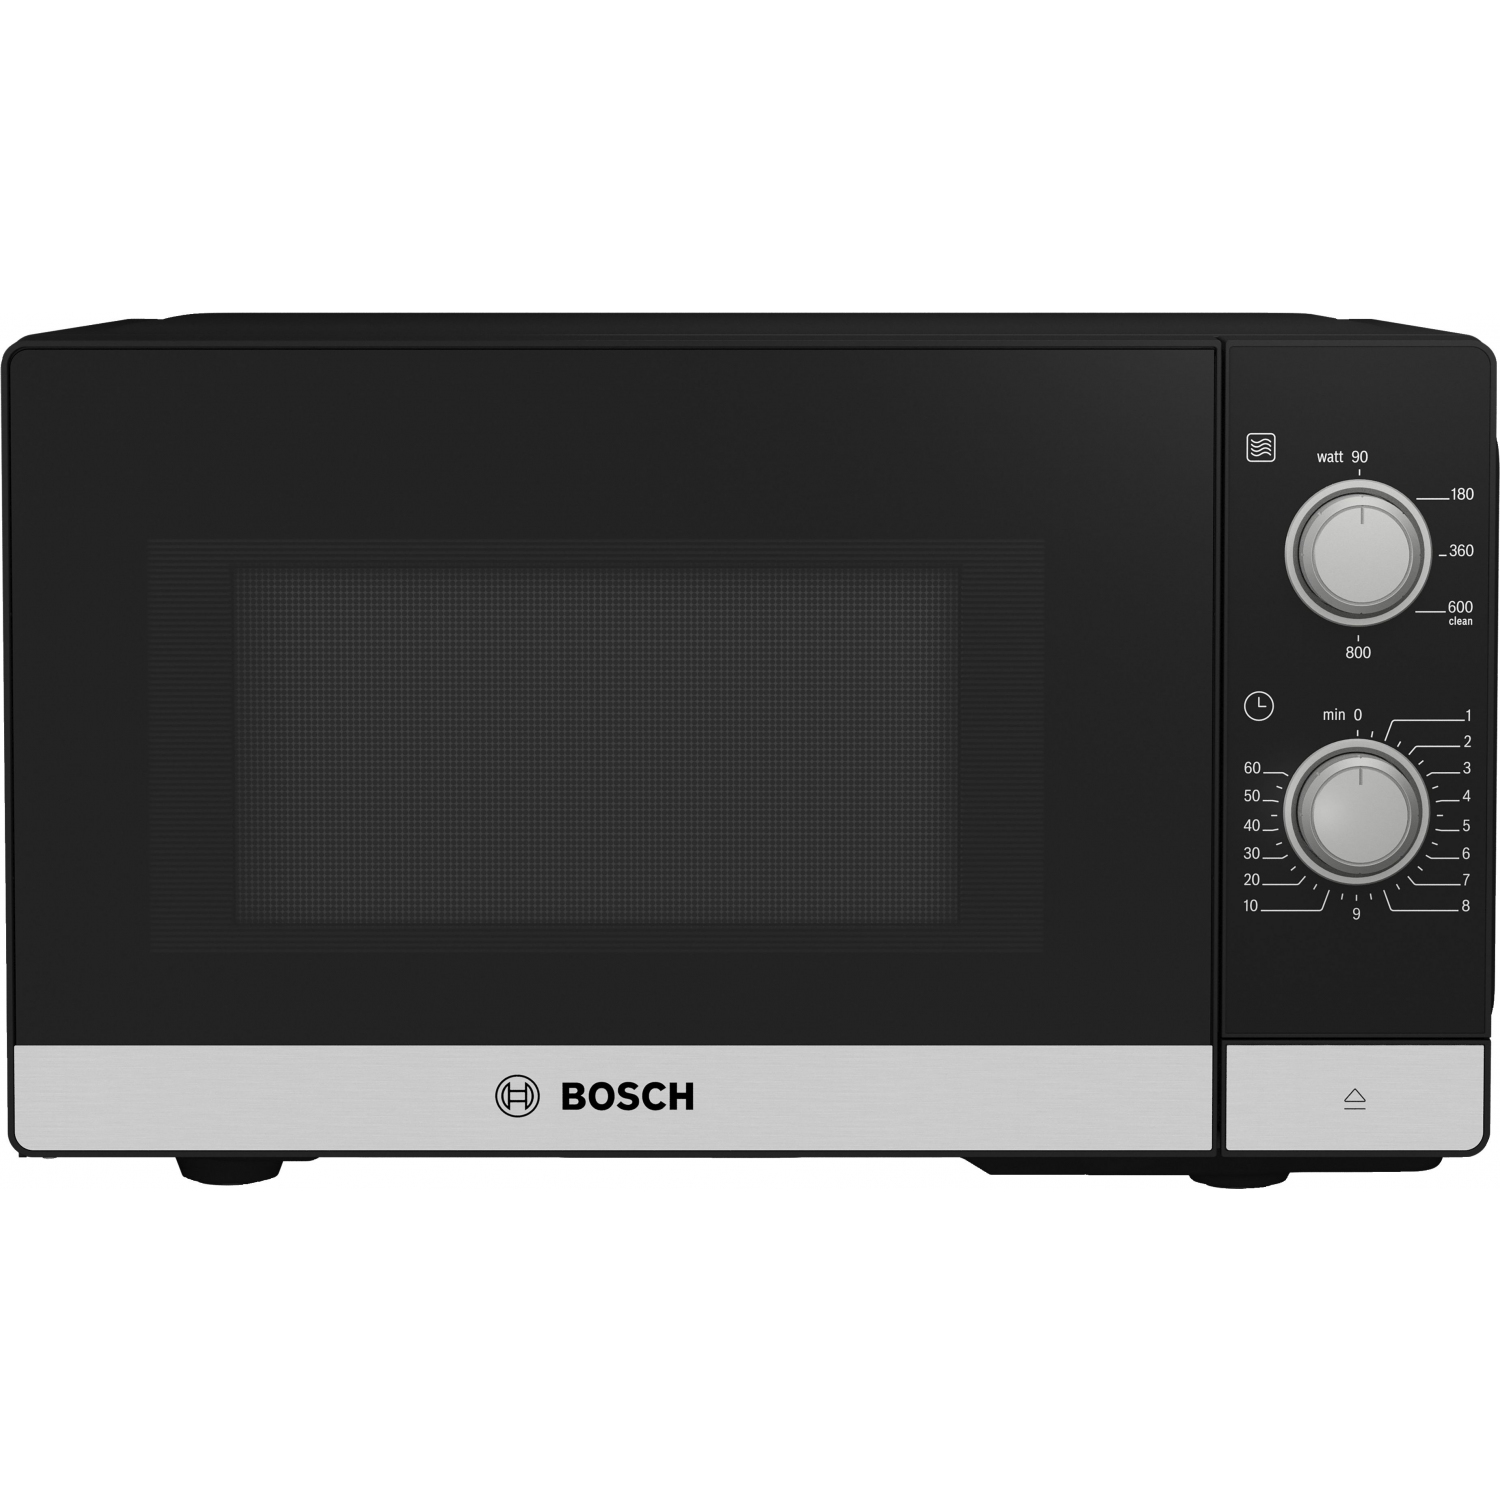 Bosch FFL020MS2B 20 Litres Single Microwave - Black - 2